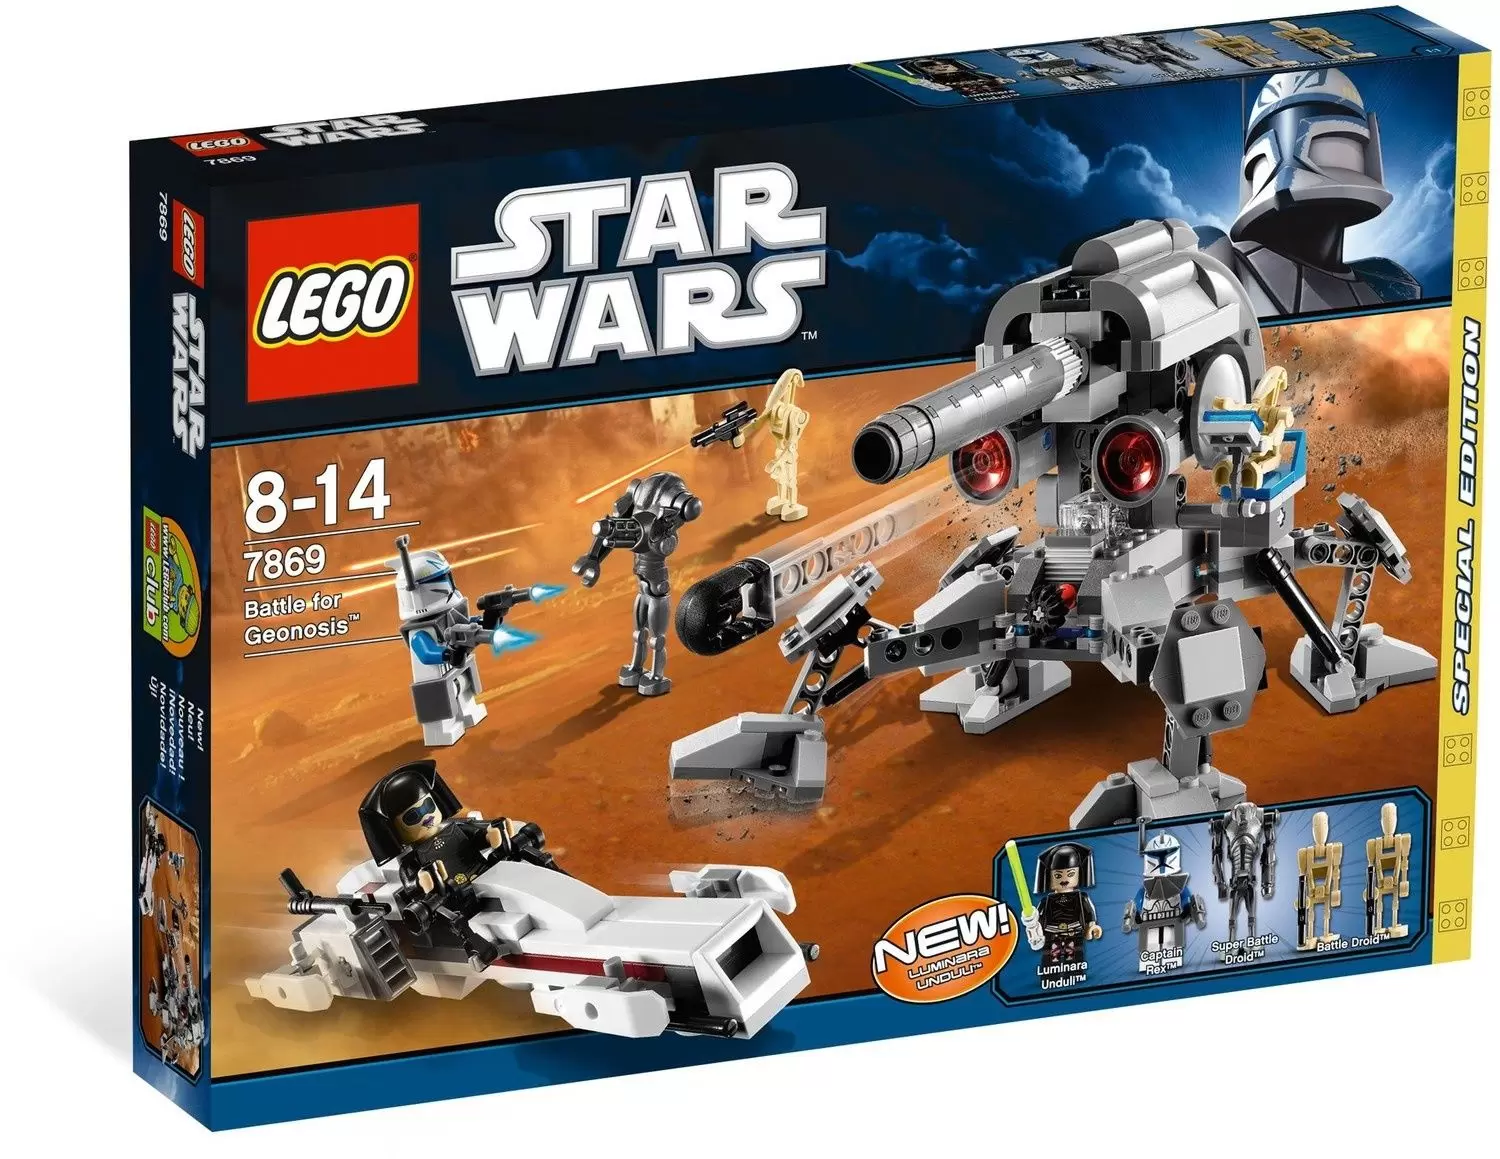 LEGO Star Wars - Battle for Geonosis